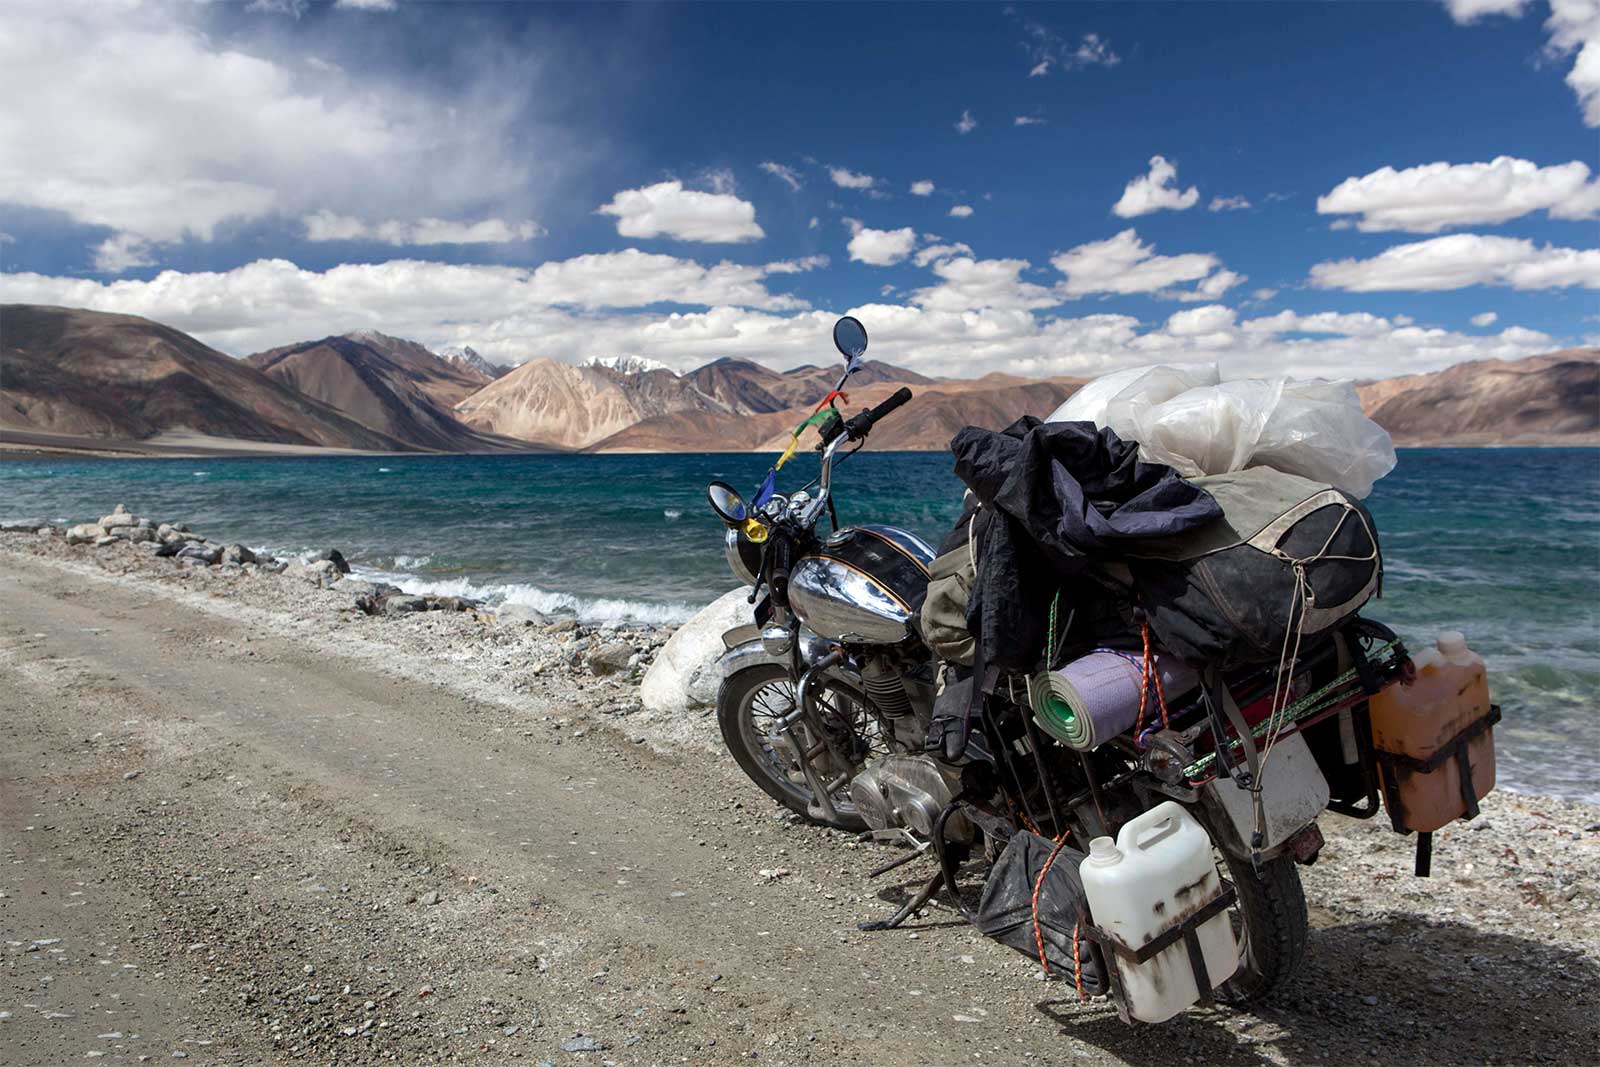 ladakh bike trip captions for instagram